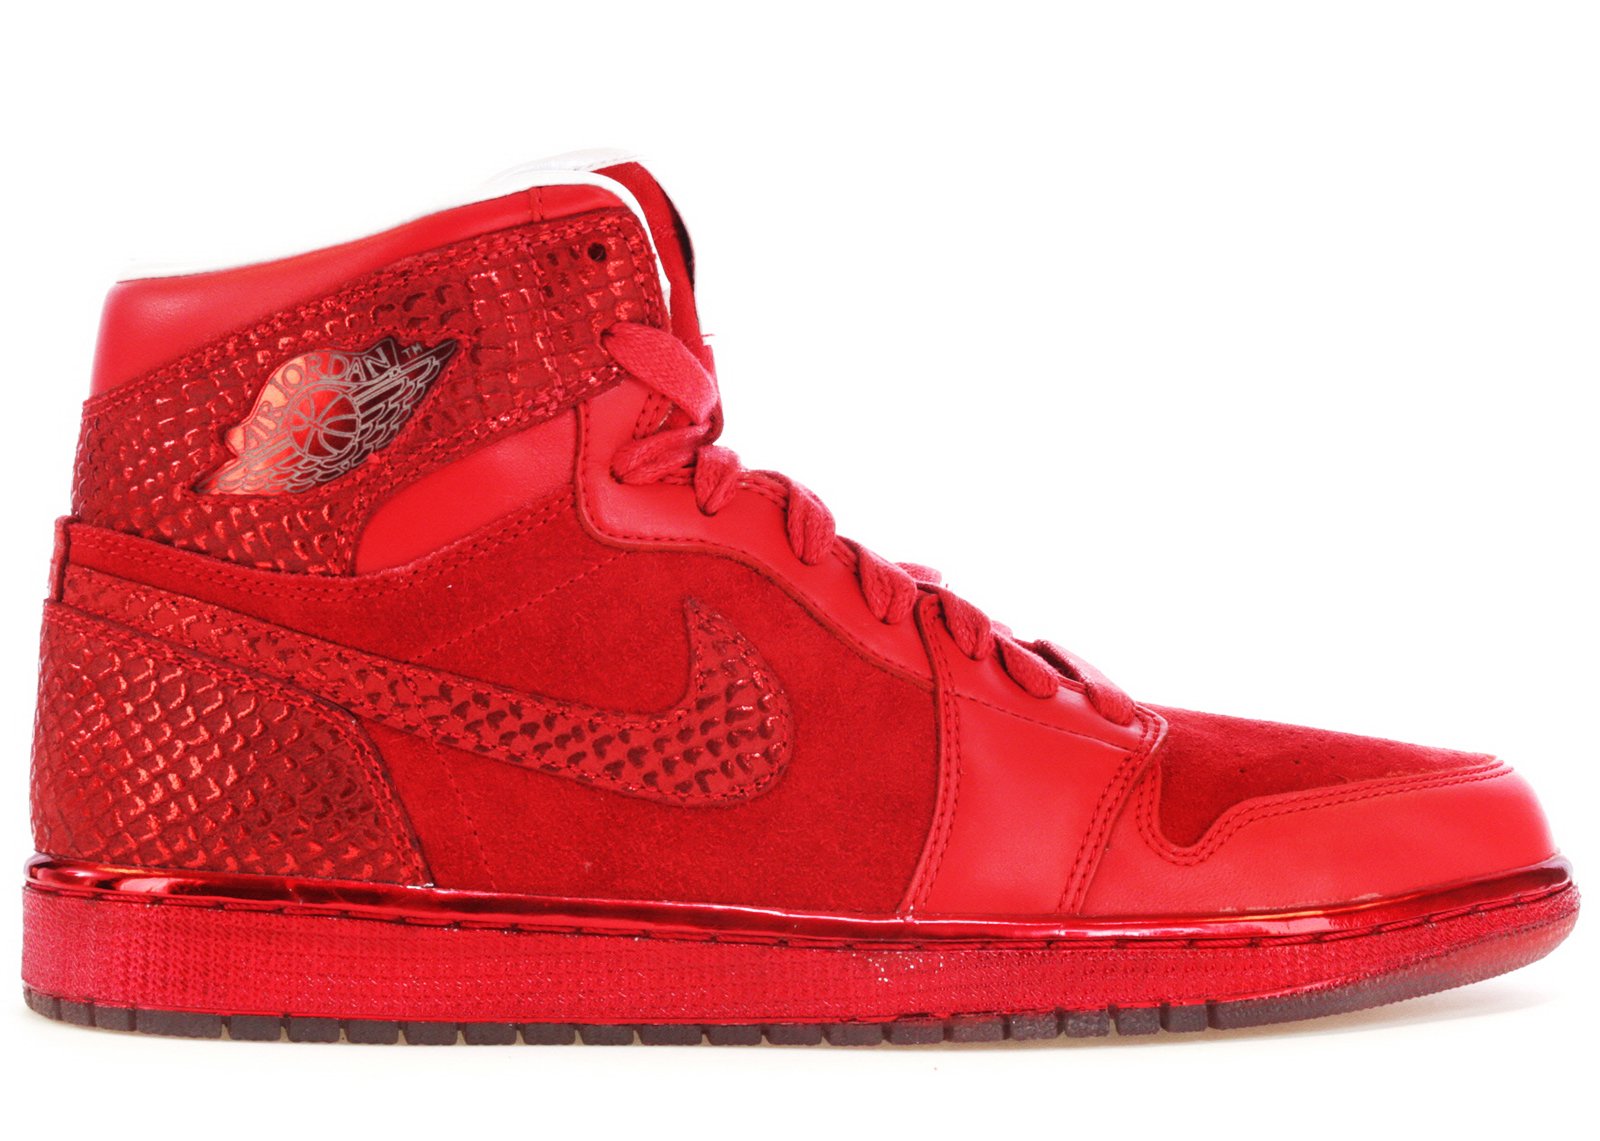 Jordan 1 Retro Legends of Summer Red sneakers